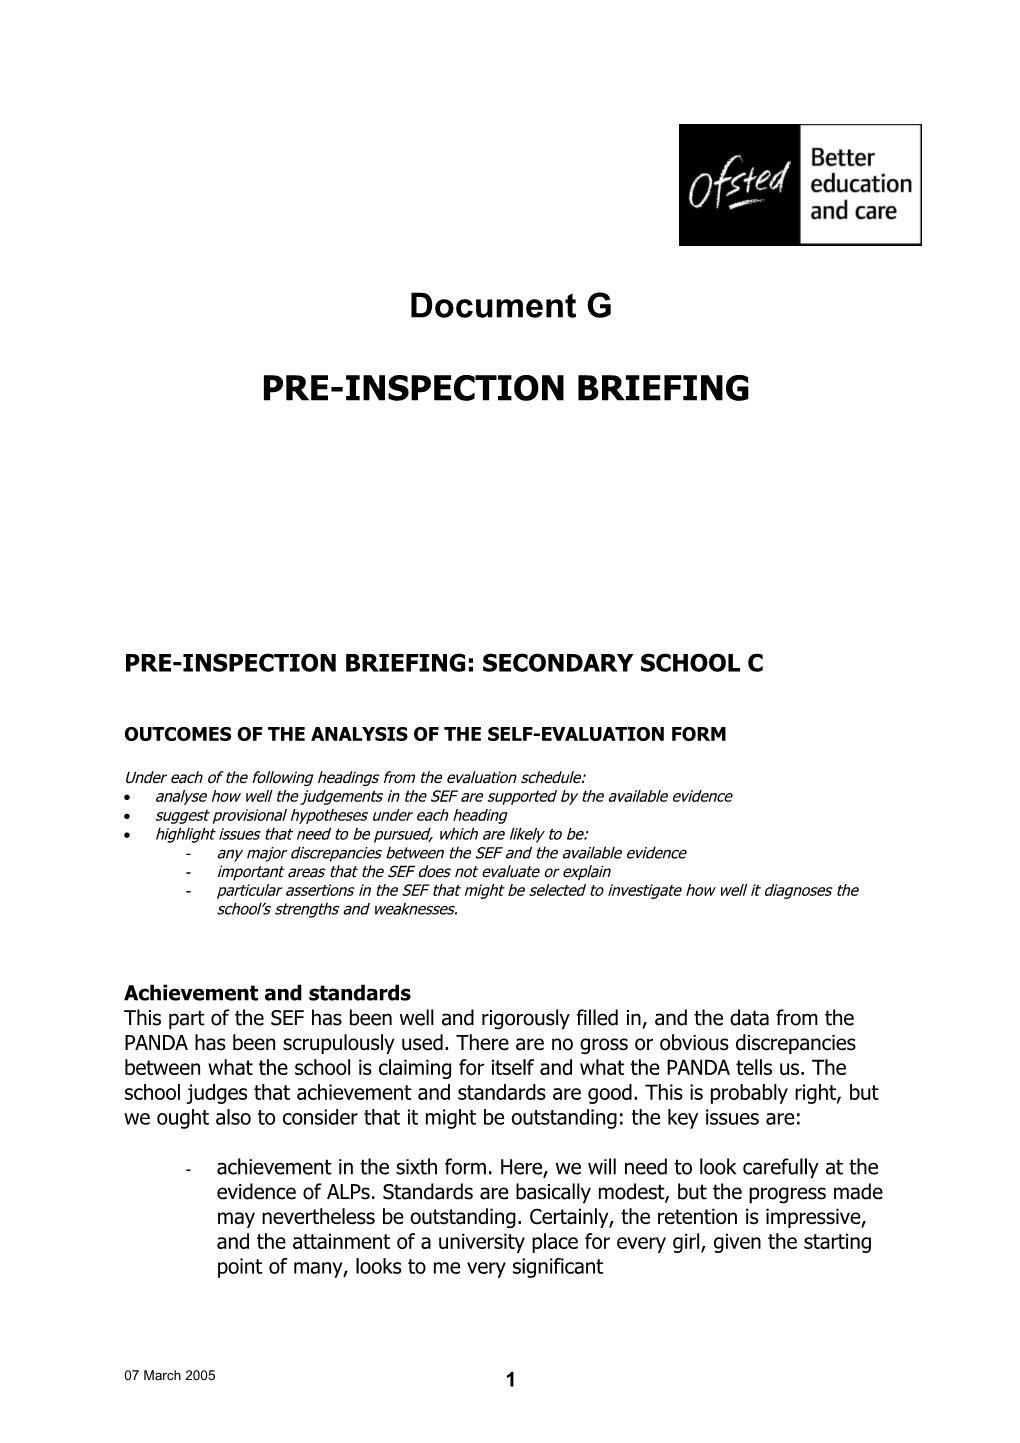 Pre-Inspection Briefing: Secondary School C